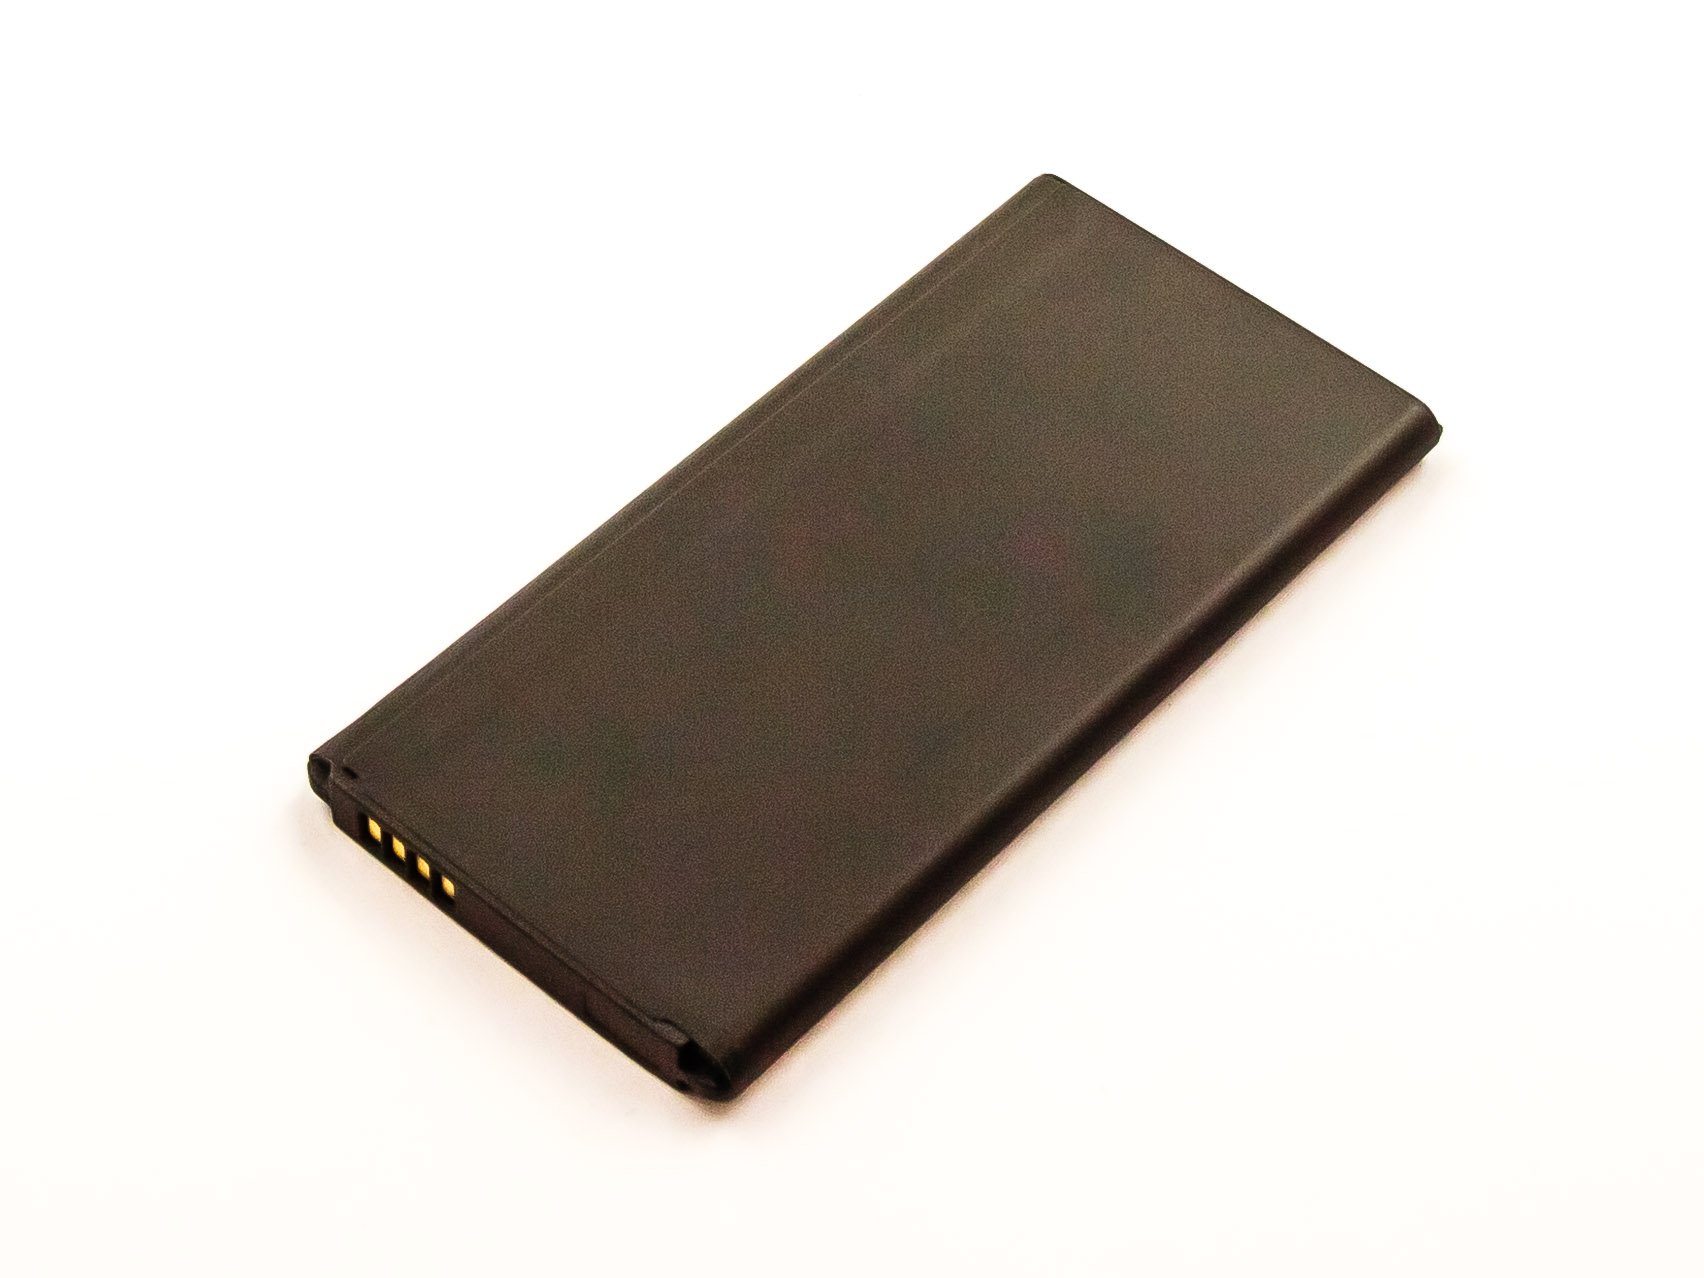 Li-Ion mAh 2800 AGI kompatibel 3.85 SM-G9009D mit Handy-/Smartphoneakku, Samsung Volt, Akku